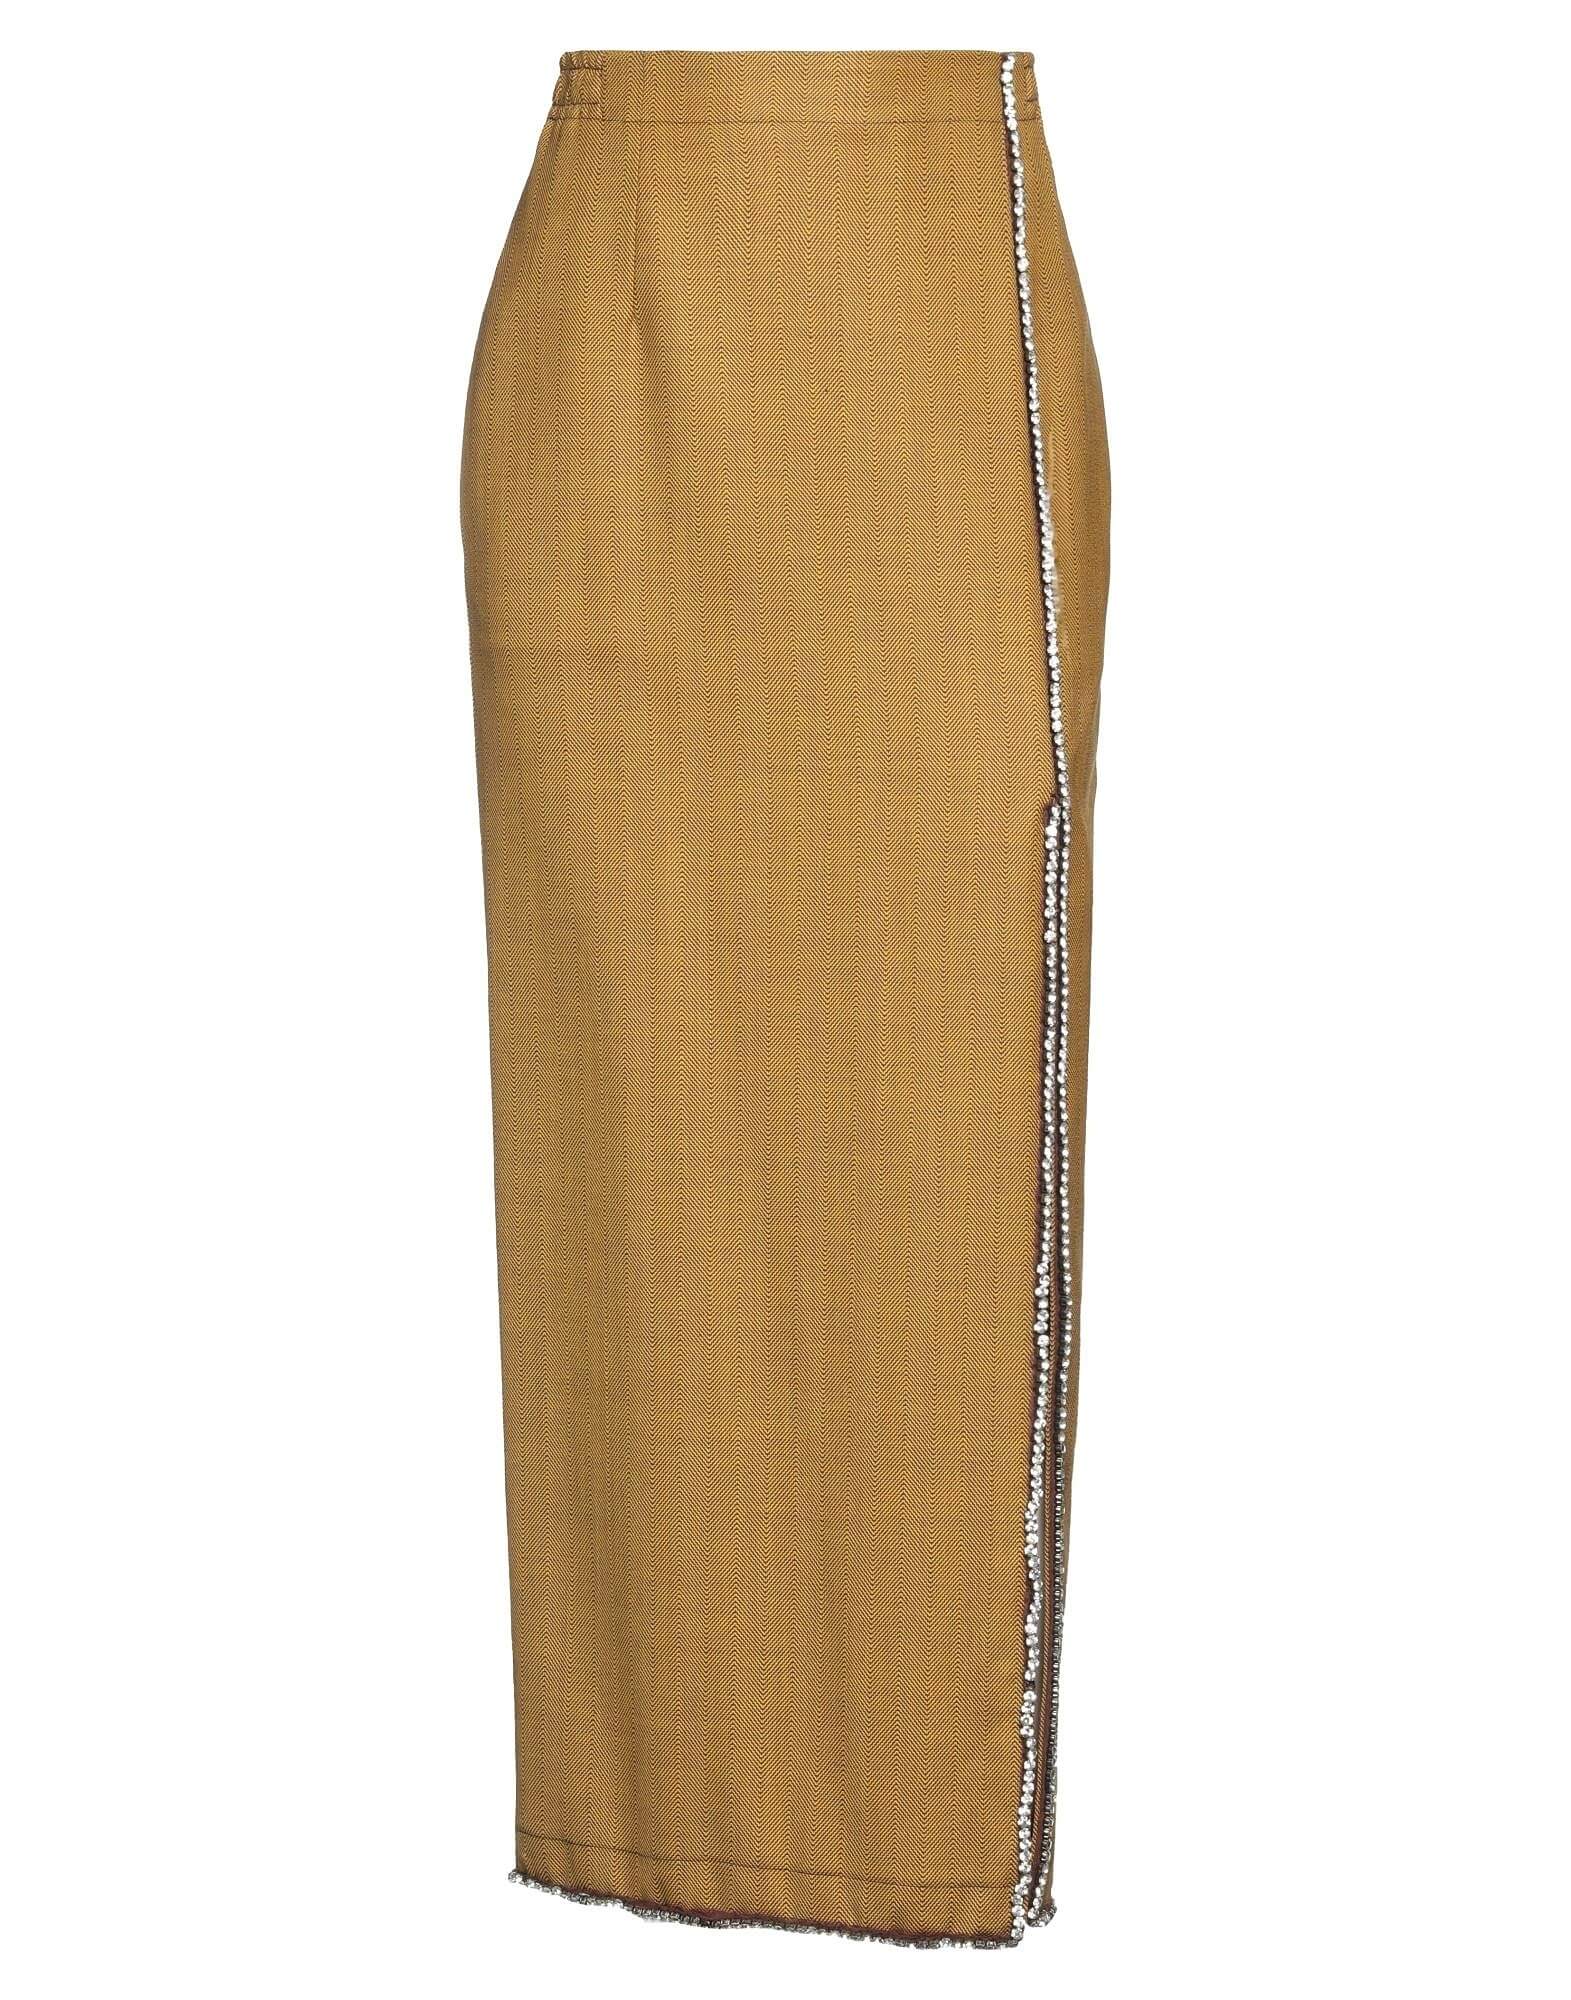 Юбка The Attico Maxi, коричневый юбка карандаш fly макси пояс на резинке размер 40 серебряный серый